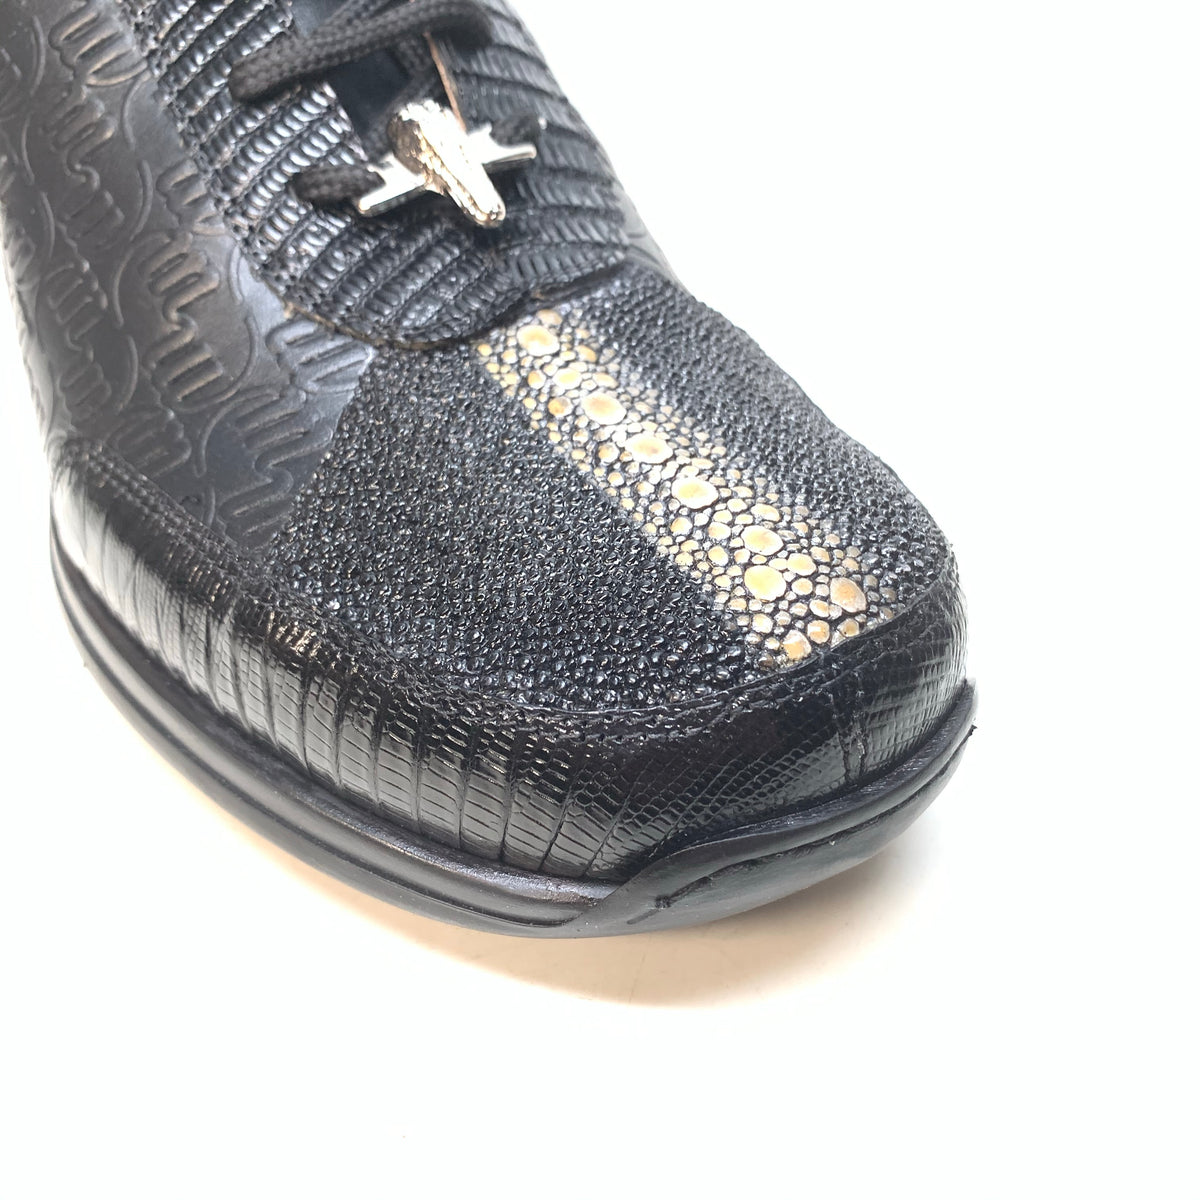 Mauri 8741/2 Black Stingray Lizard Ostrich Leg Sneakers - Dudes Boutique